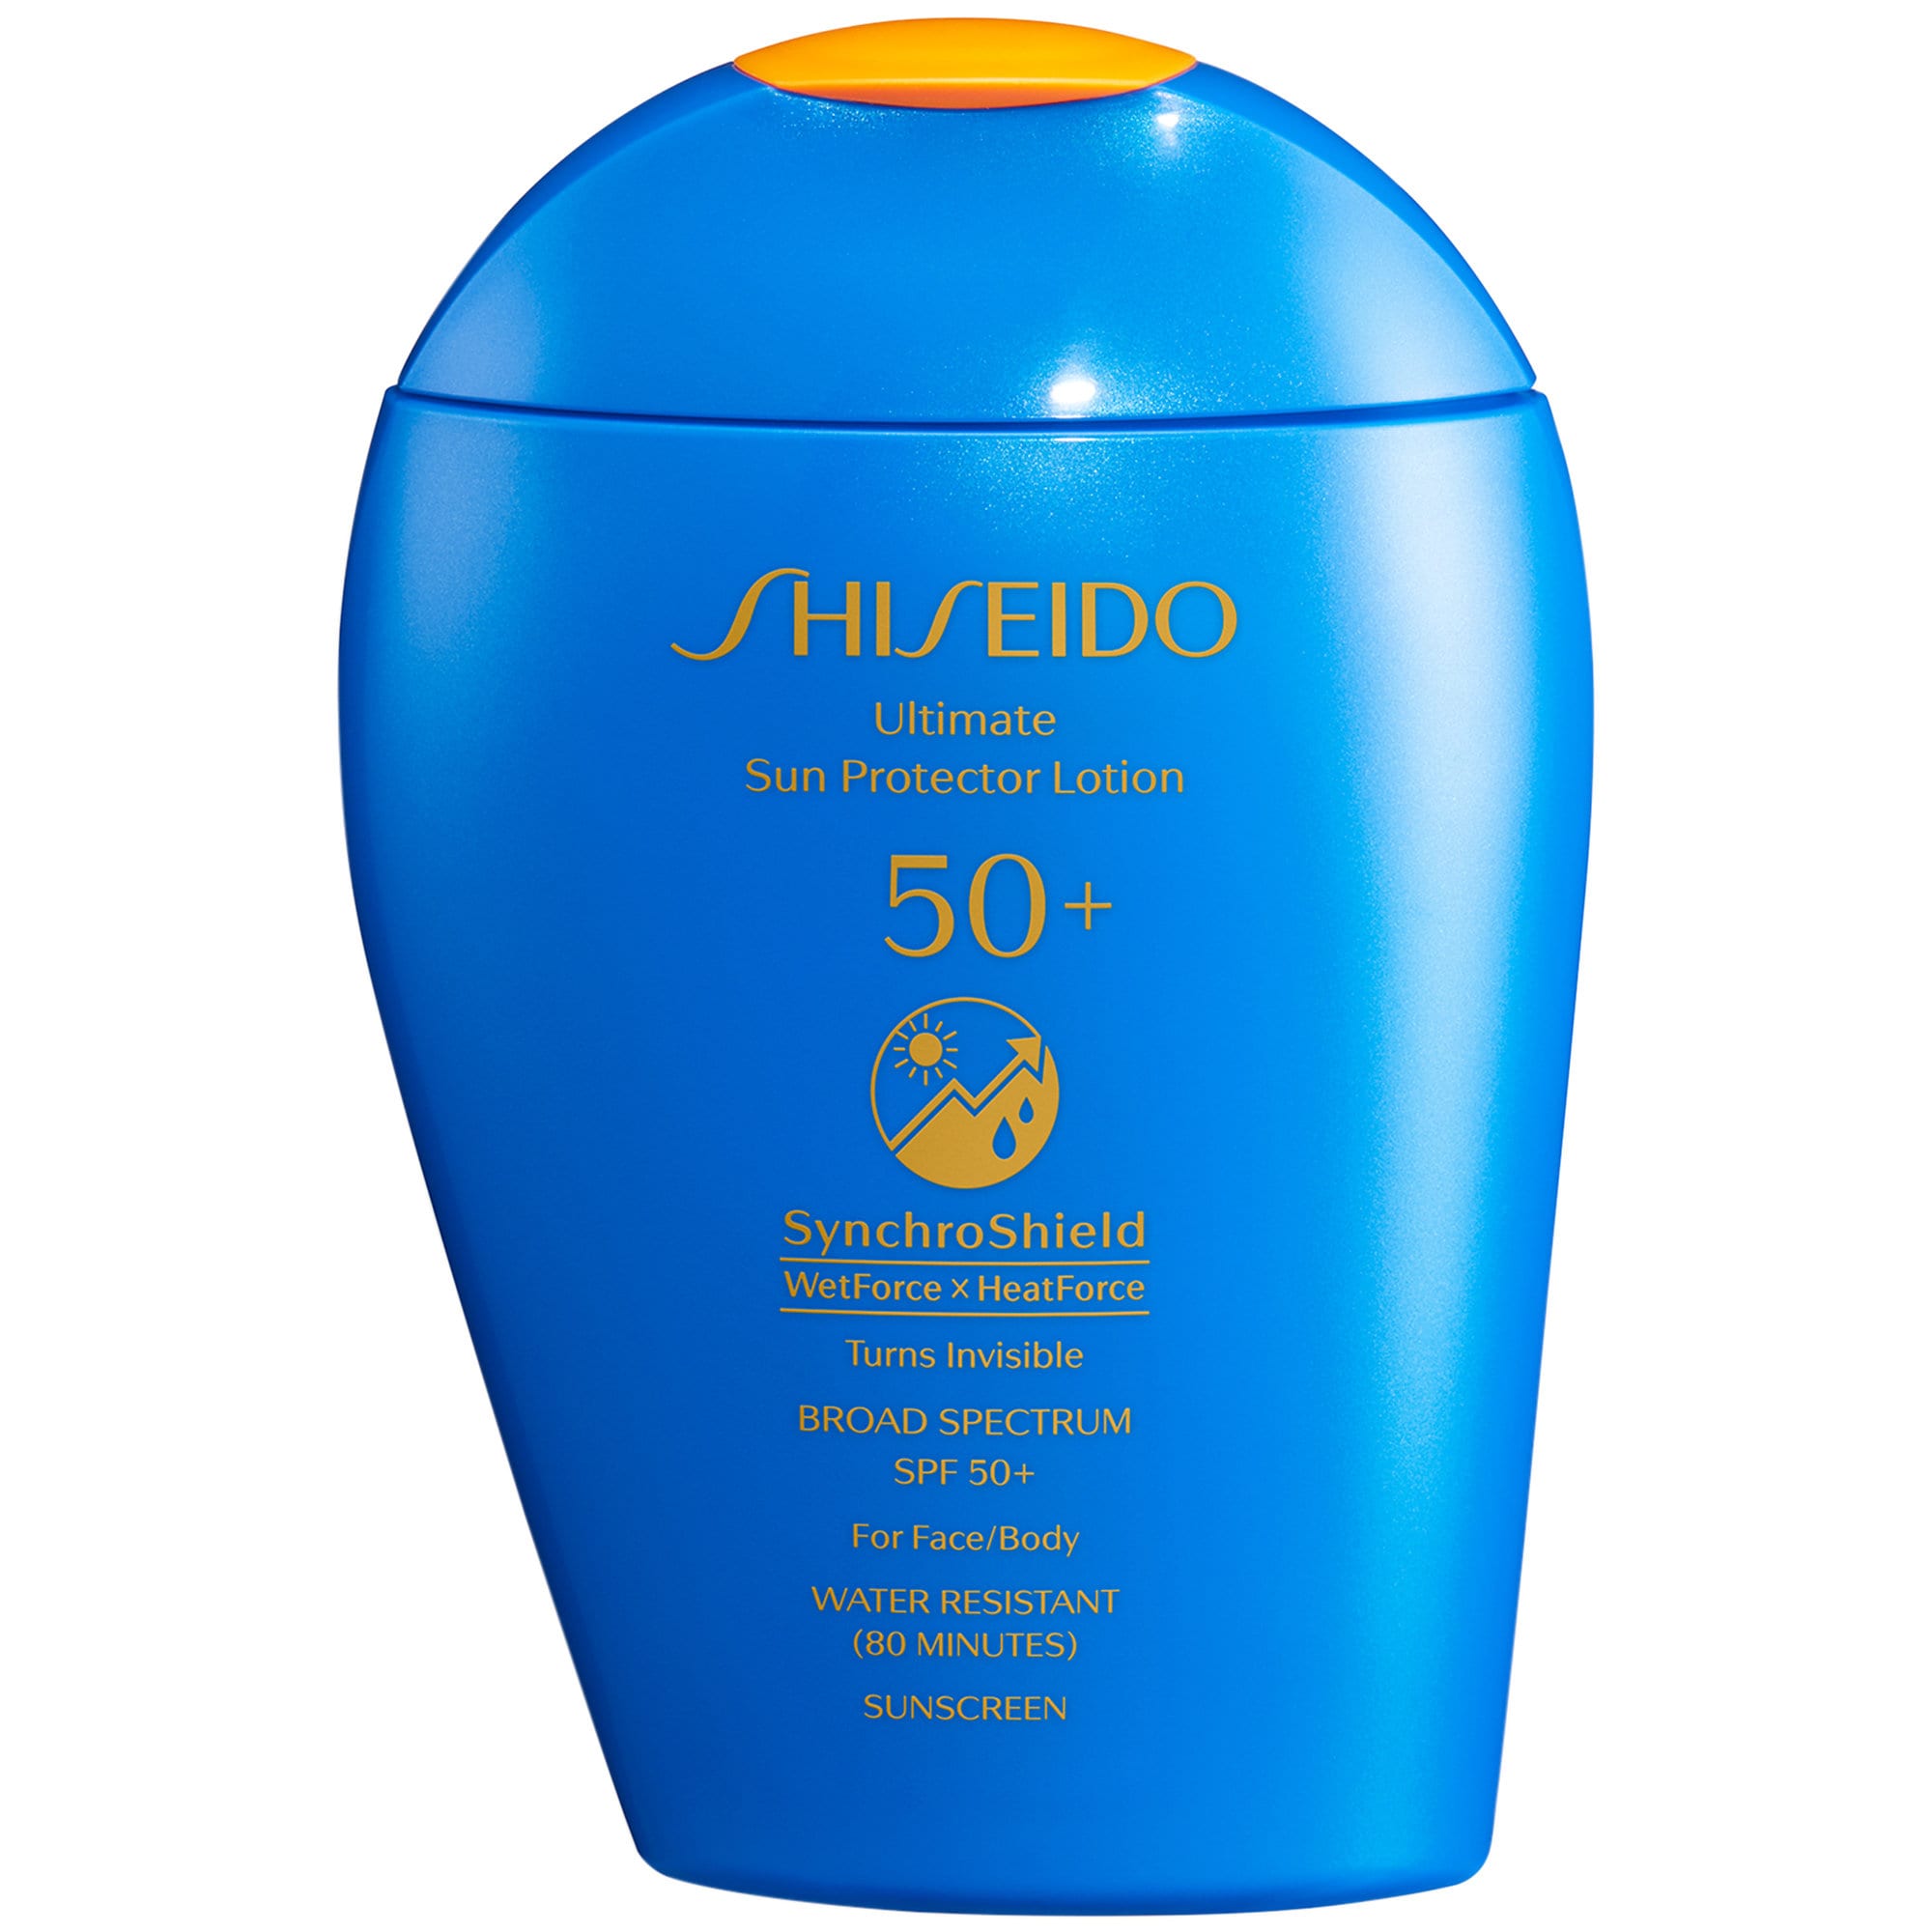 shiseido sunscreen.jpeg